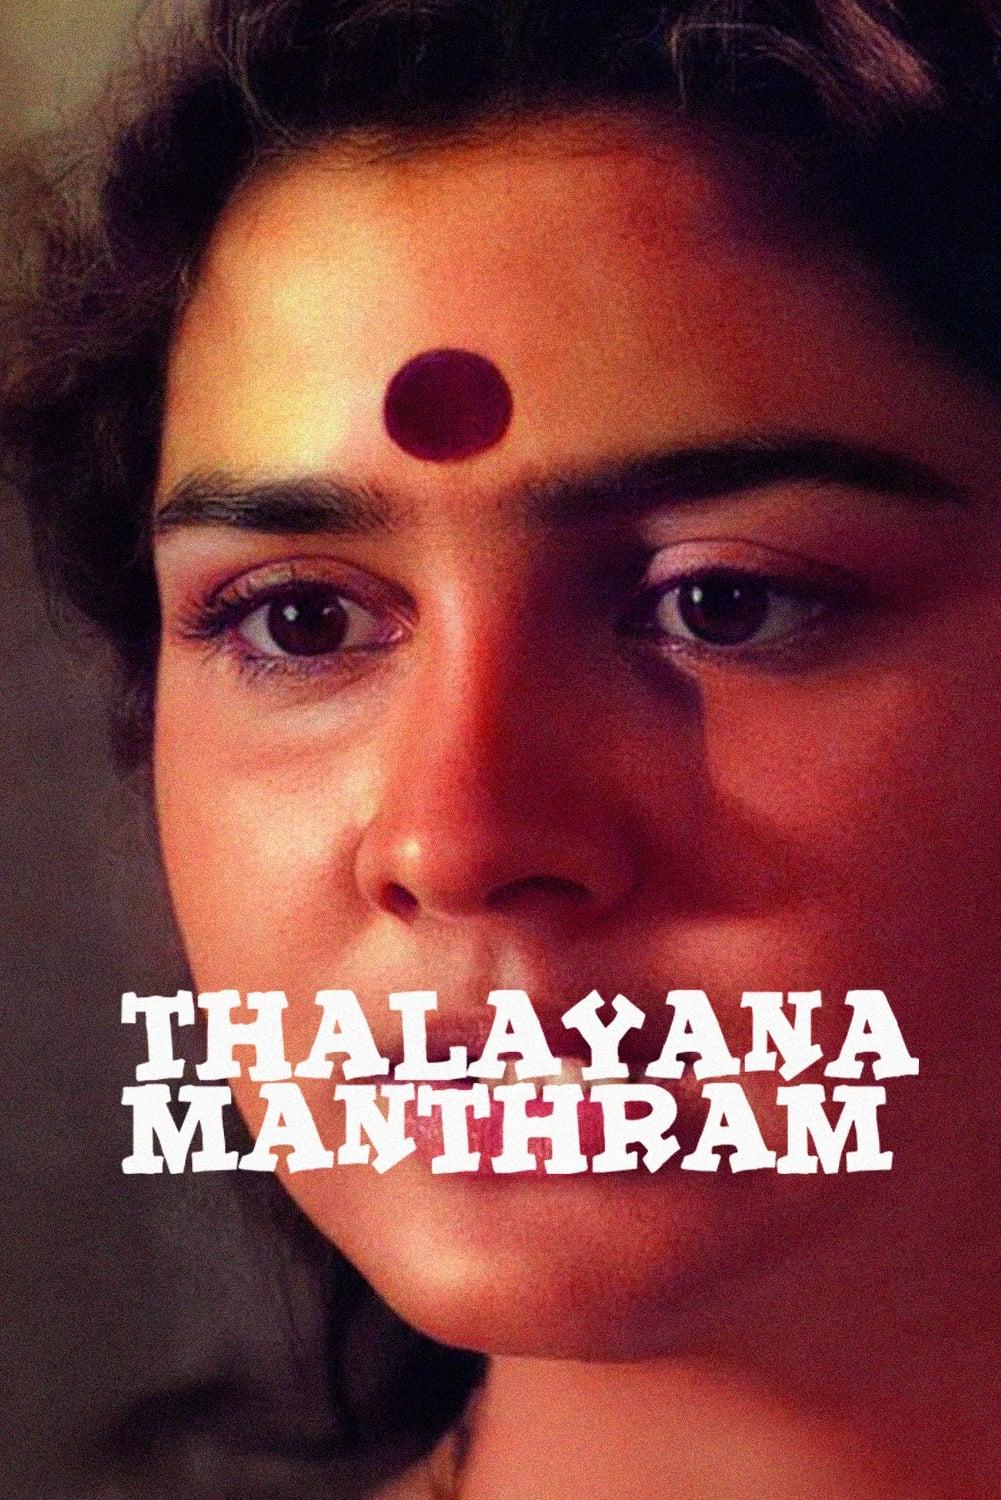 Thalayanamanthram poster